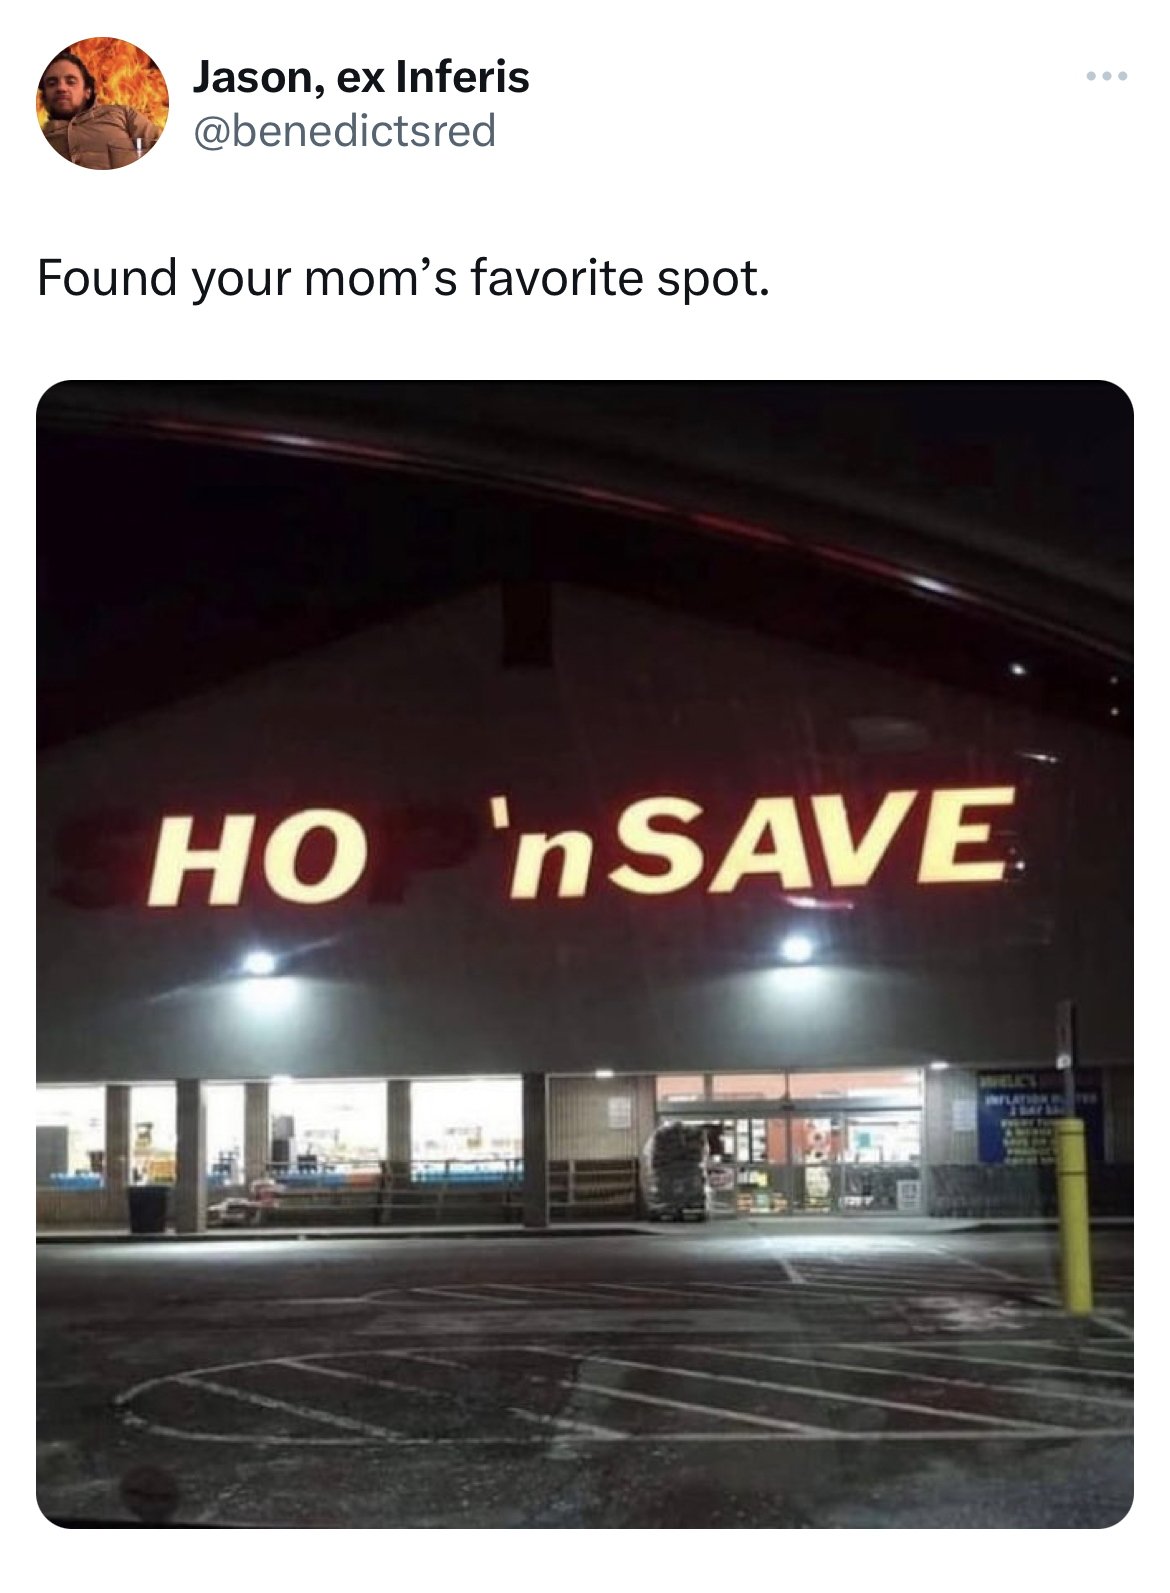 savage tweets - display advertising - Jason, ex Inferis Found your mom's favorite spot. Ho 'n Save